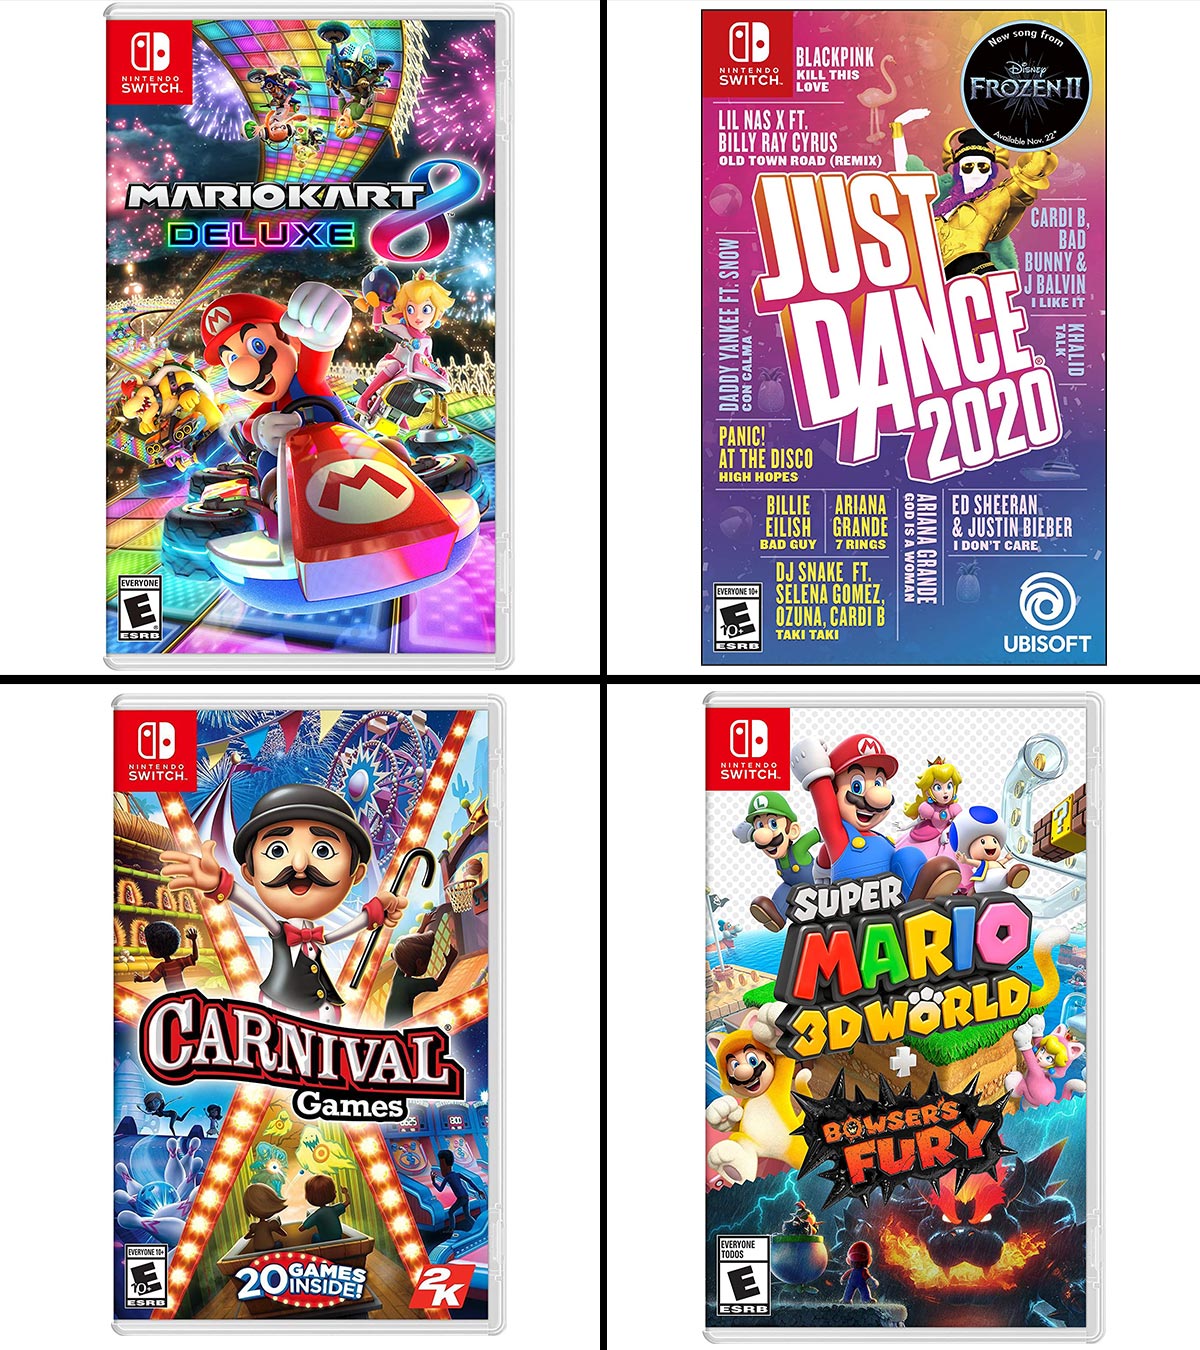 https://www.momjunction.com/wp-content/uploads/2021/08/13-Best-Switch-Games-For-Kids-in-2021-Banner-MJ.jpg